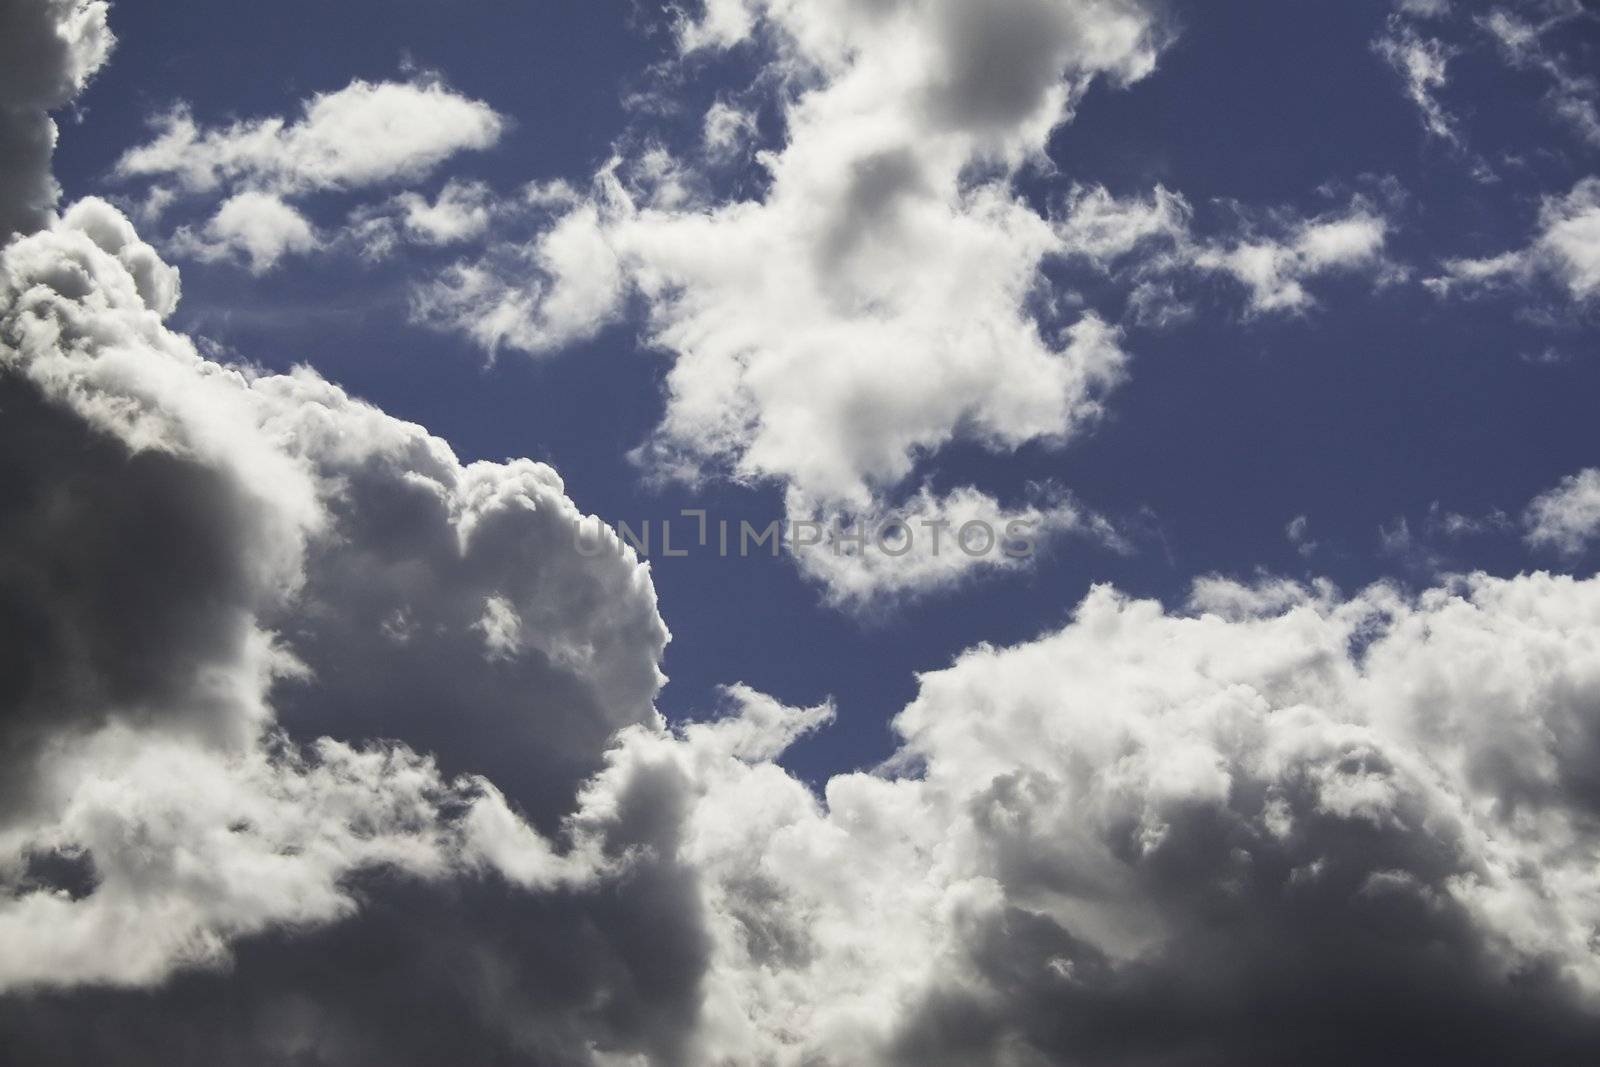 Storm Clouds on Blue Sky in Summer by suwanneeredhead